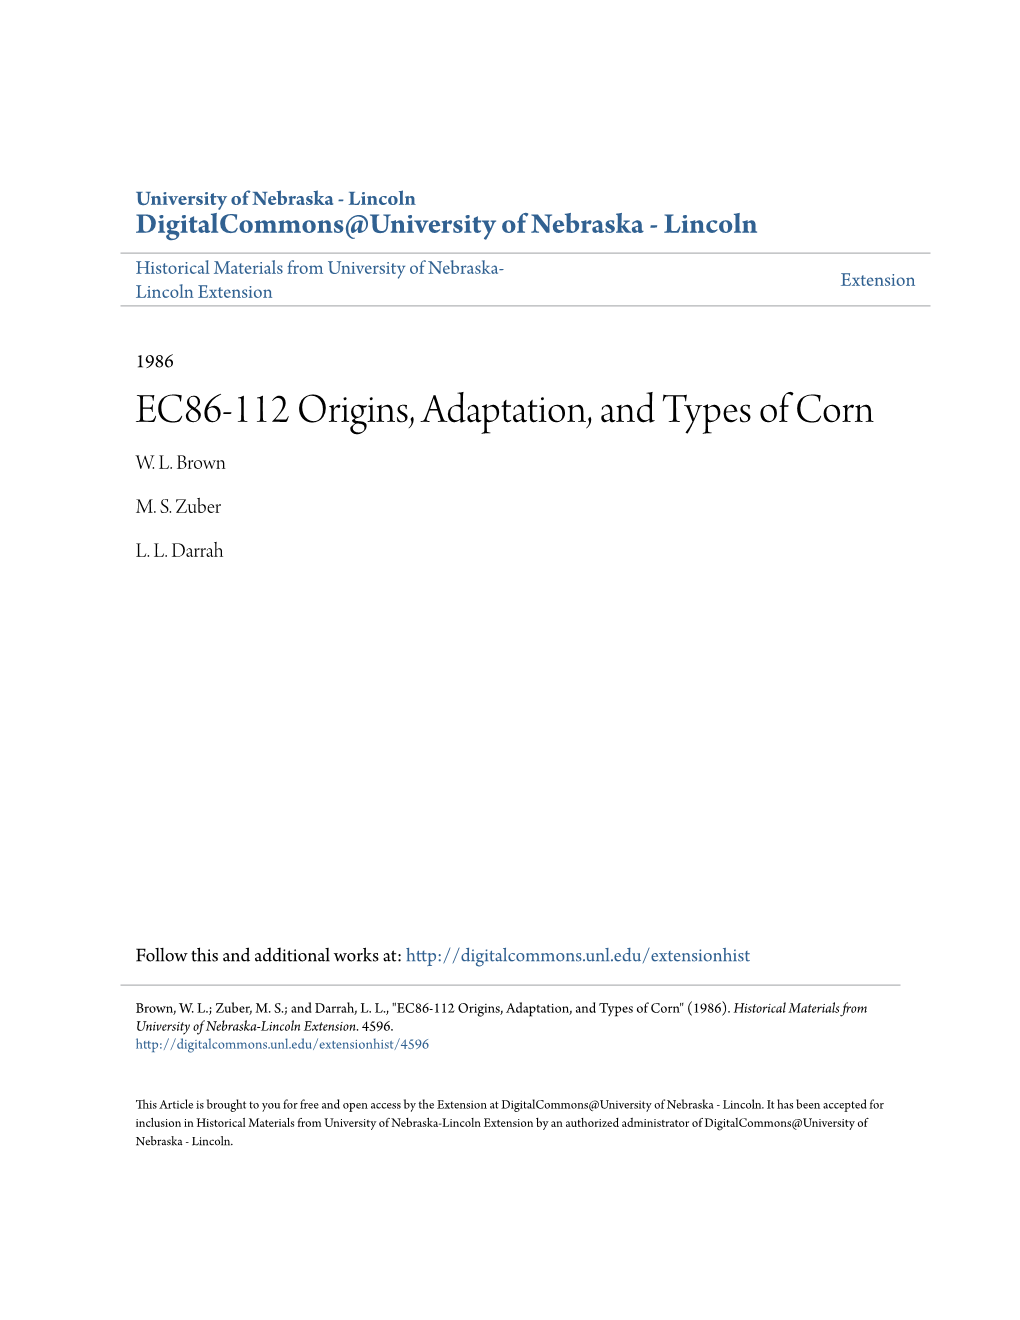 EC86-112 Origins, Adaptation, and Types of Corn W